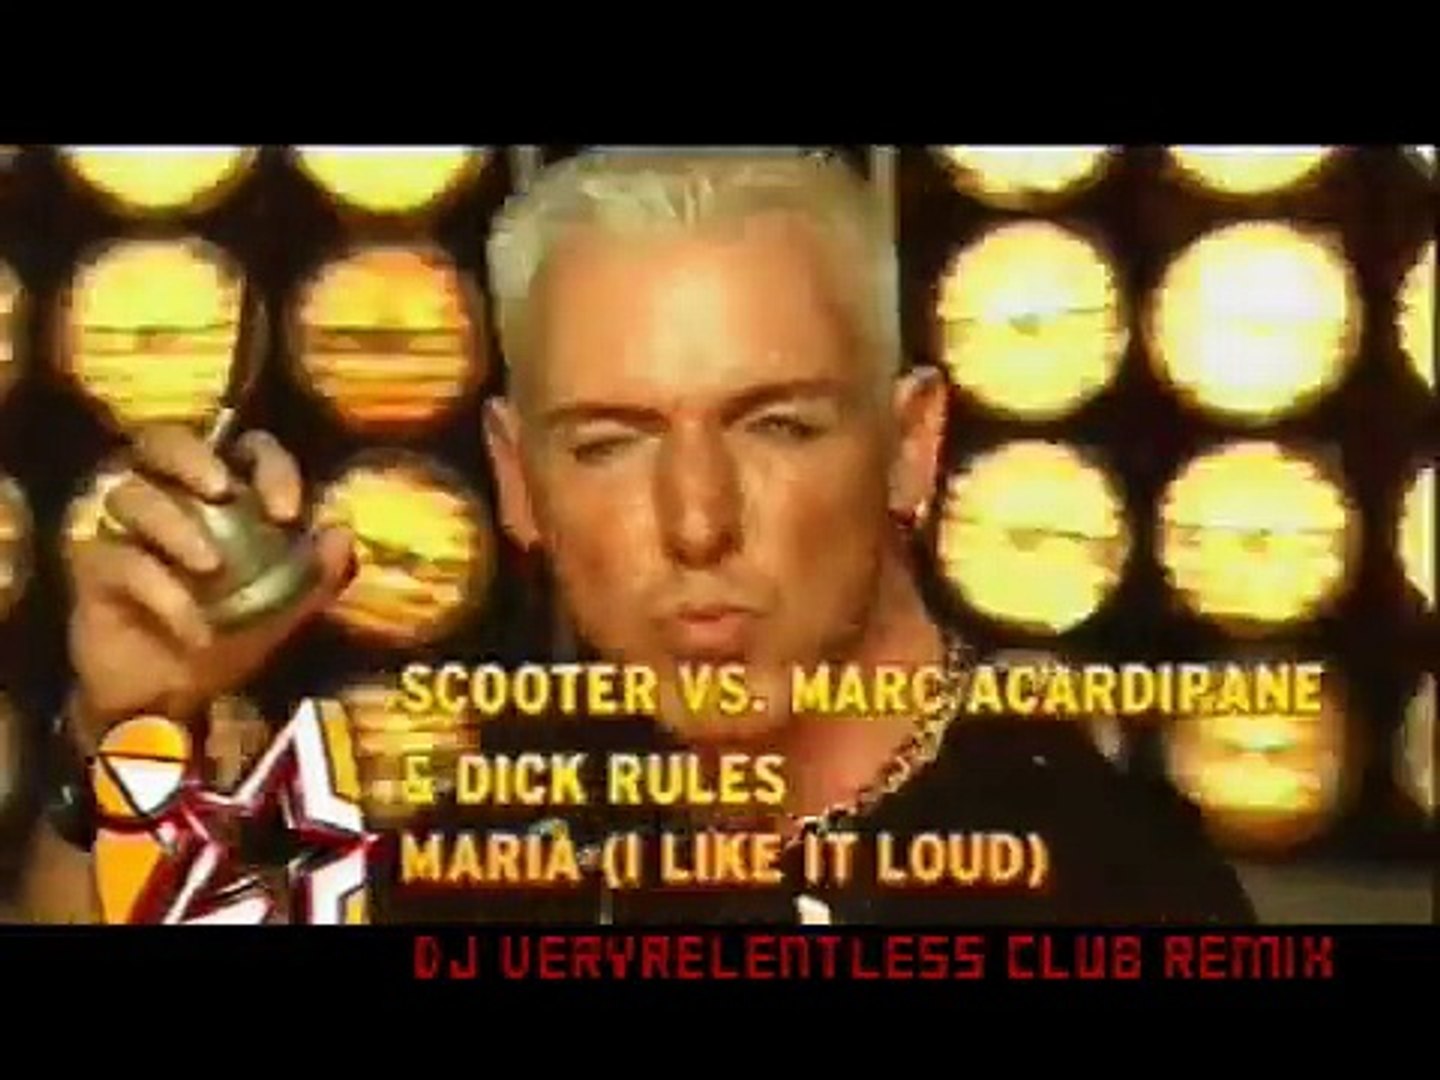 ubetalt Pas på stereoanlæg Scooter - Maria (I Like It Loud)(Club Remix) - video Dailymotion